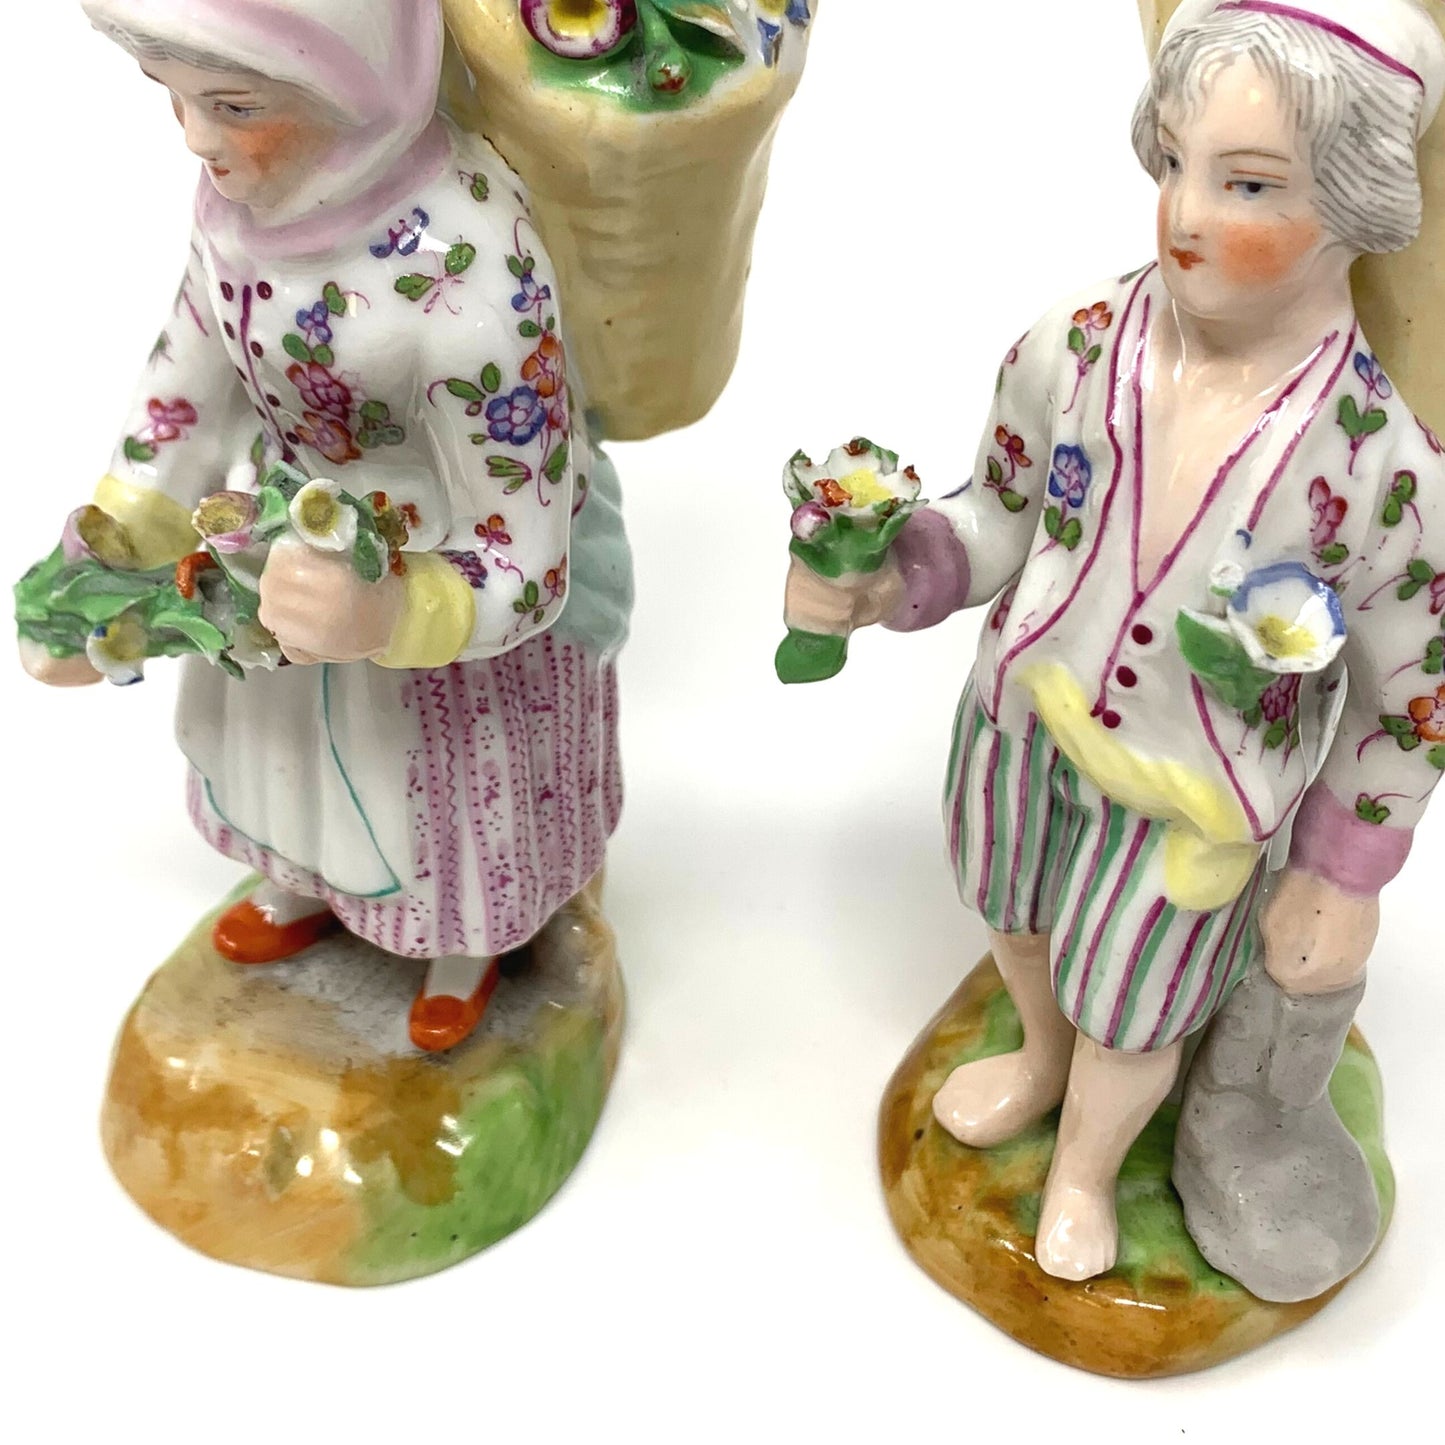 Pair of 18th Century Meissen Flower Seller Figurines